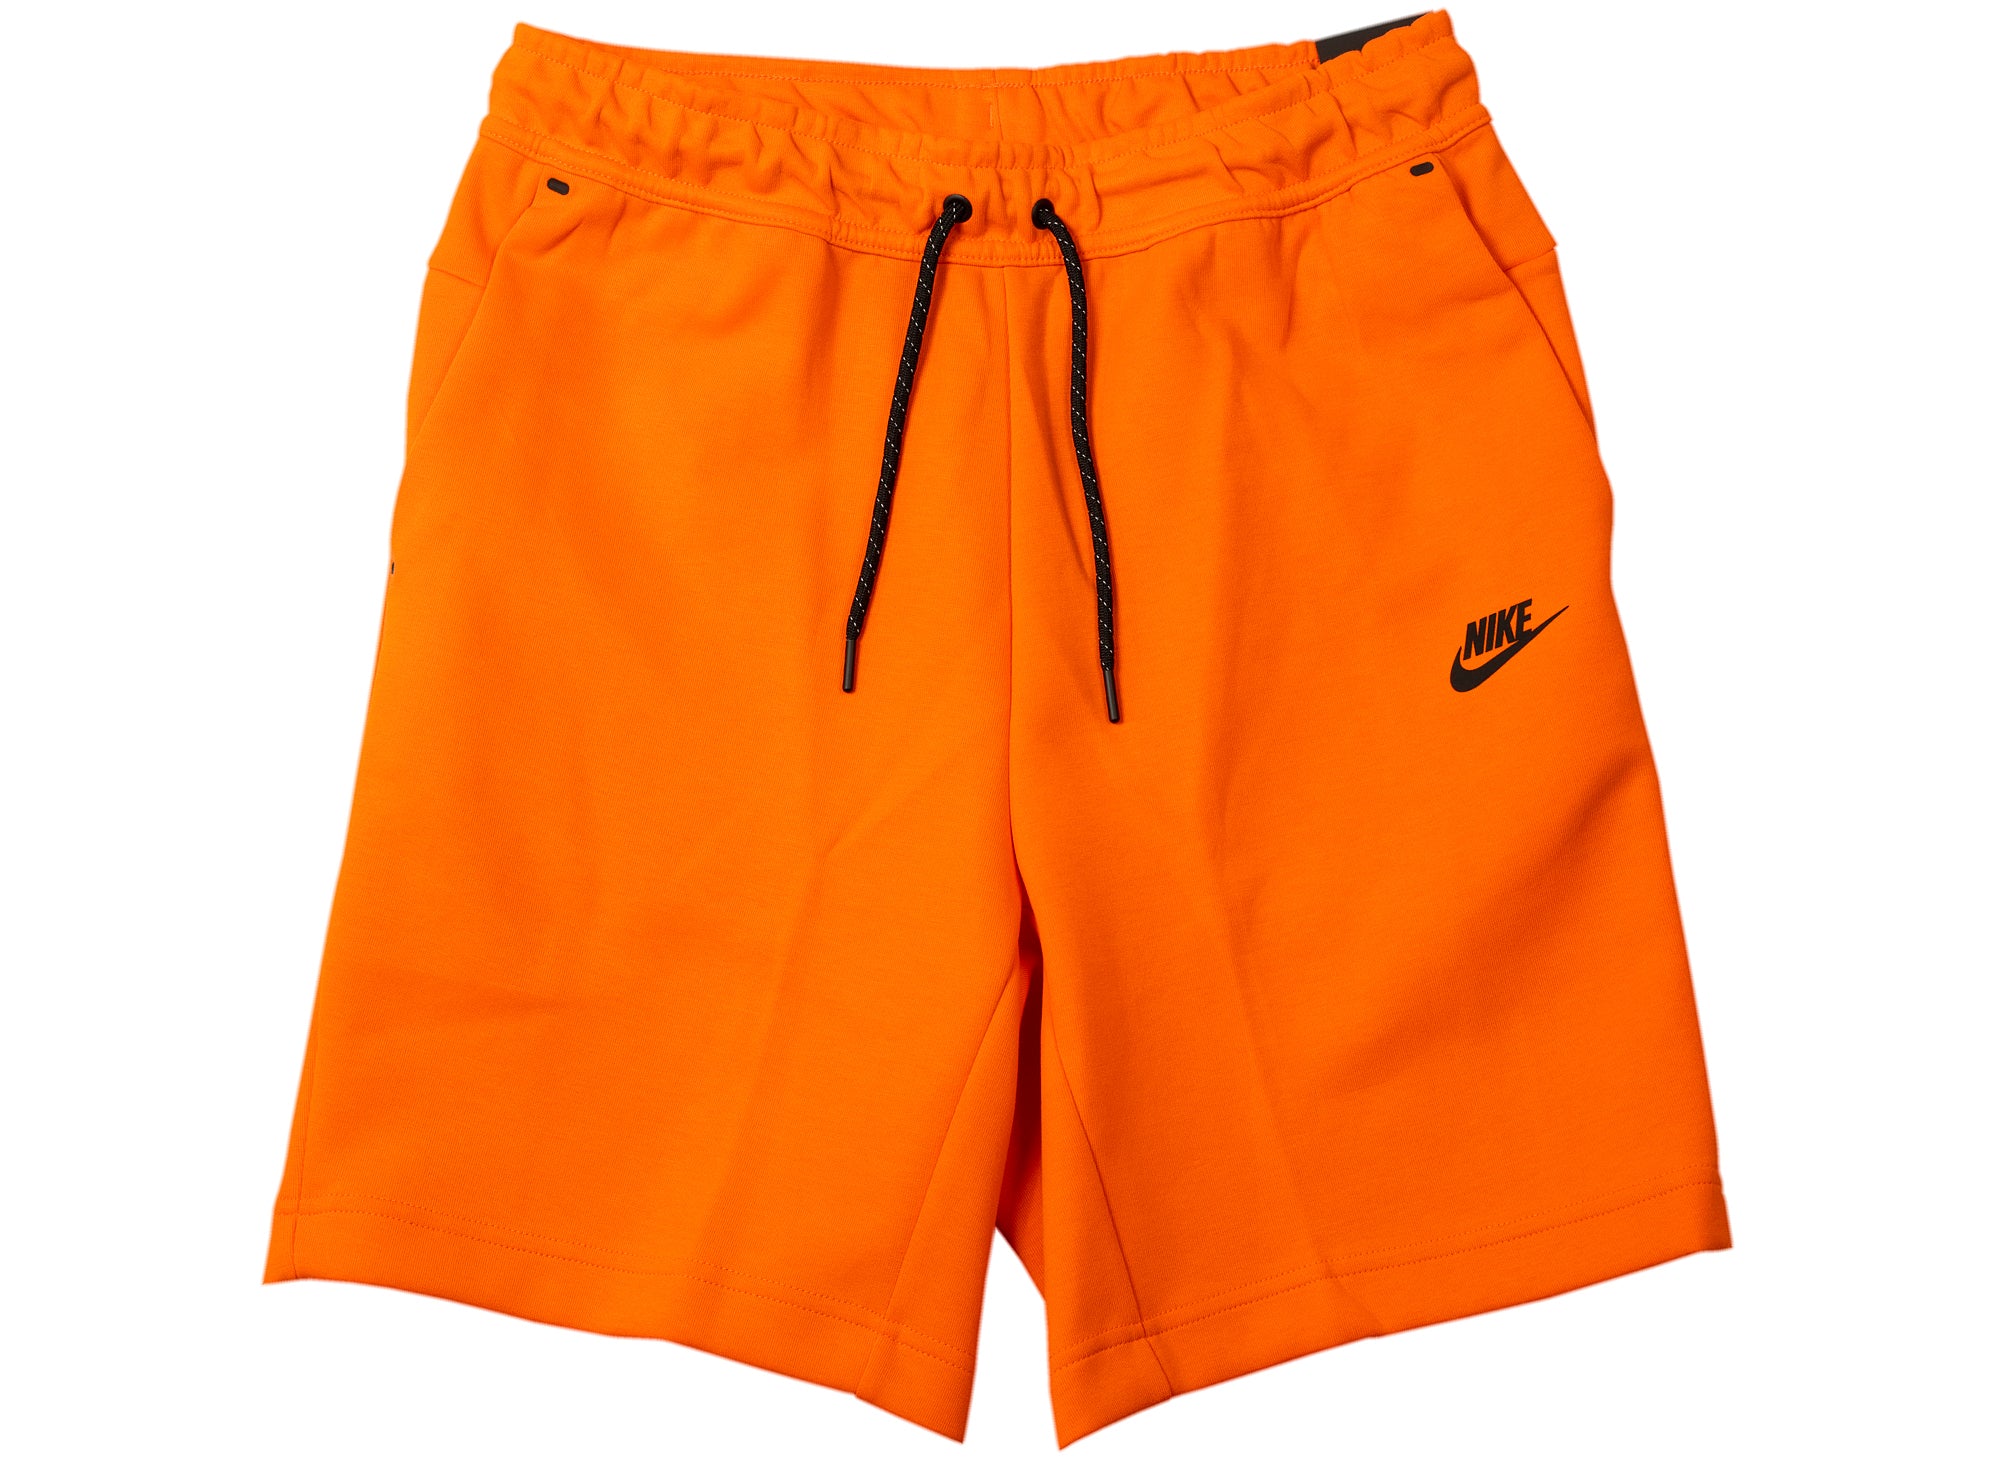 Menagerry Th Bretele orange nike shorts 